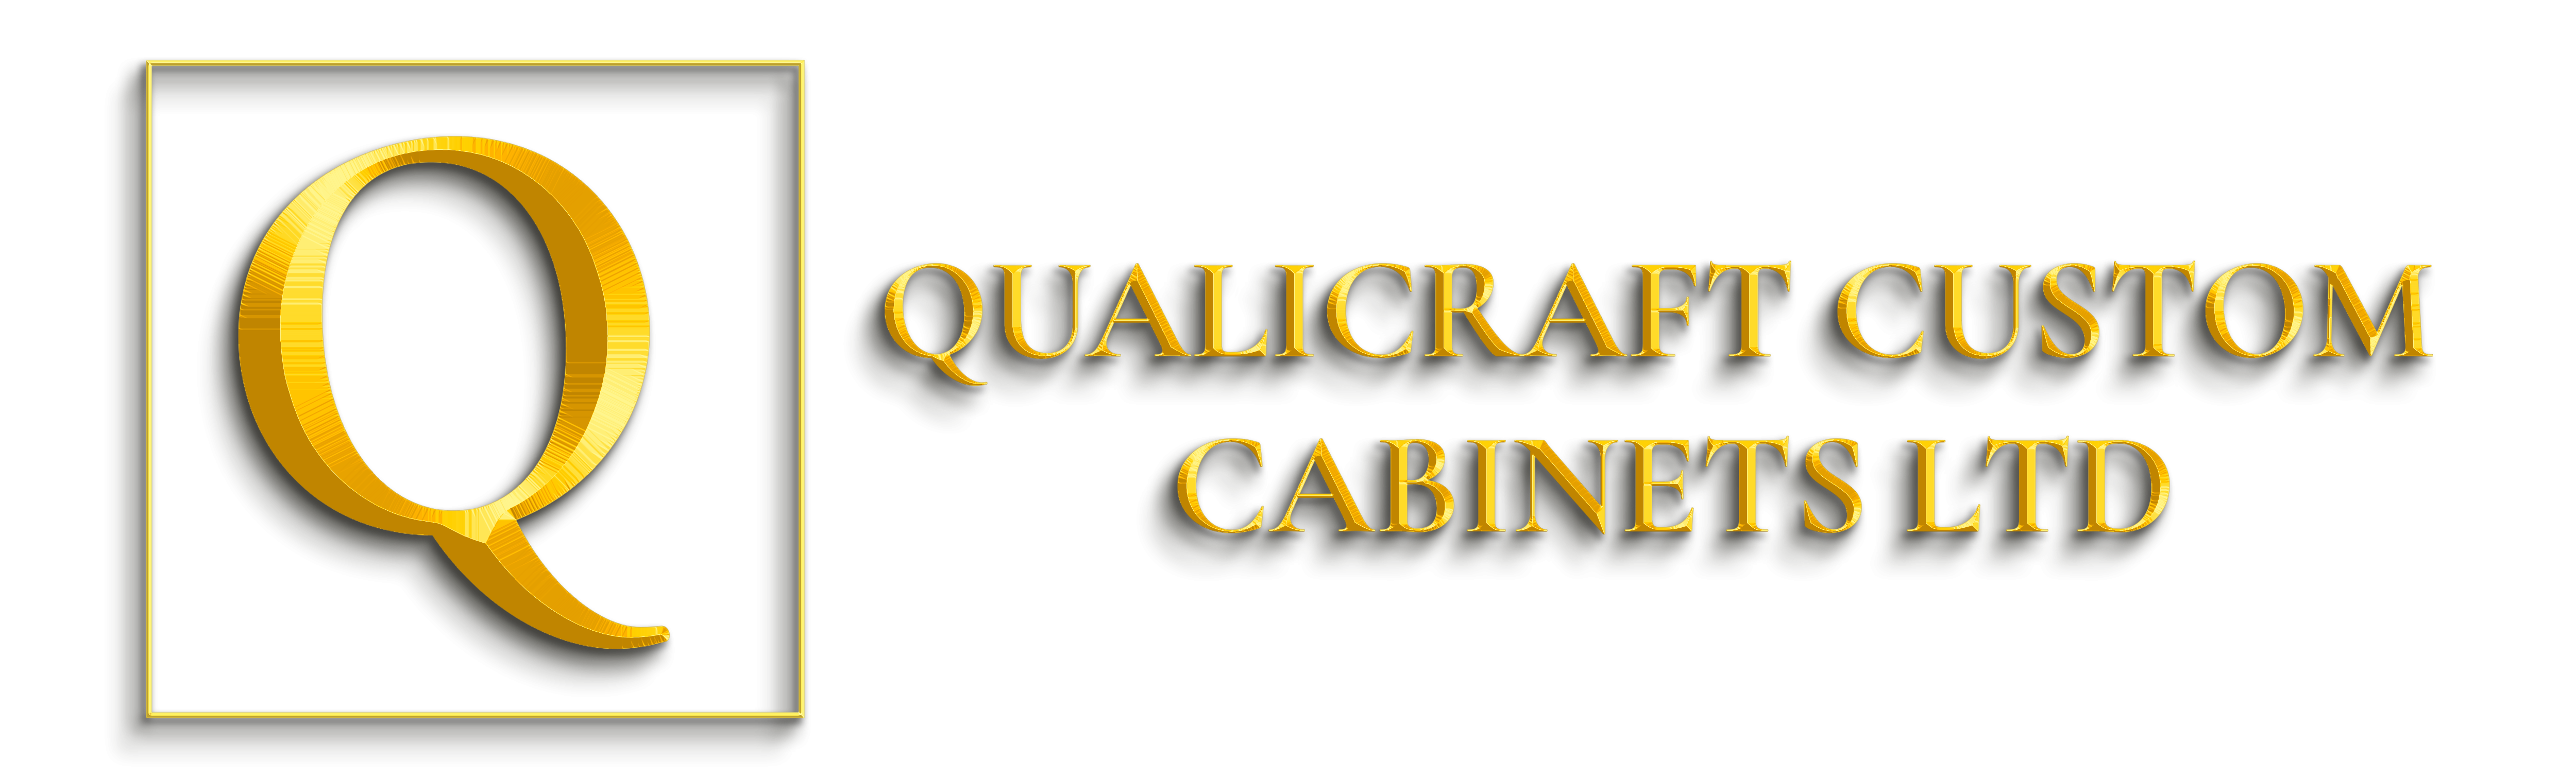 Qualicraft Logo from Website